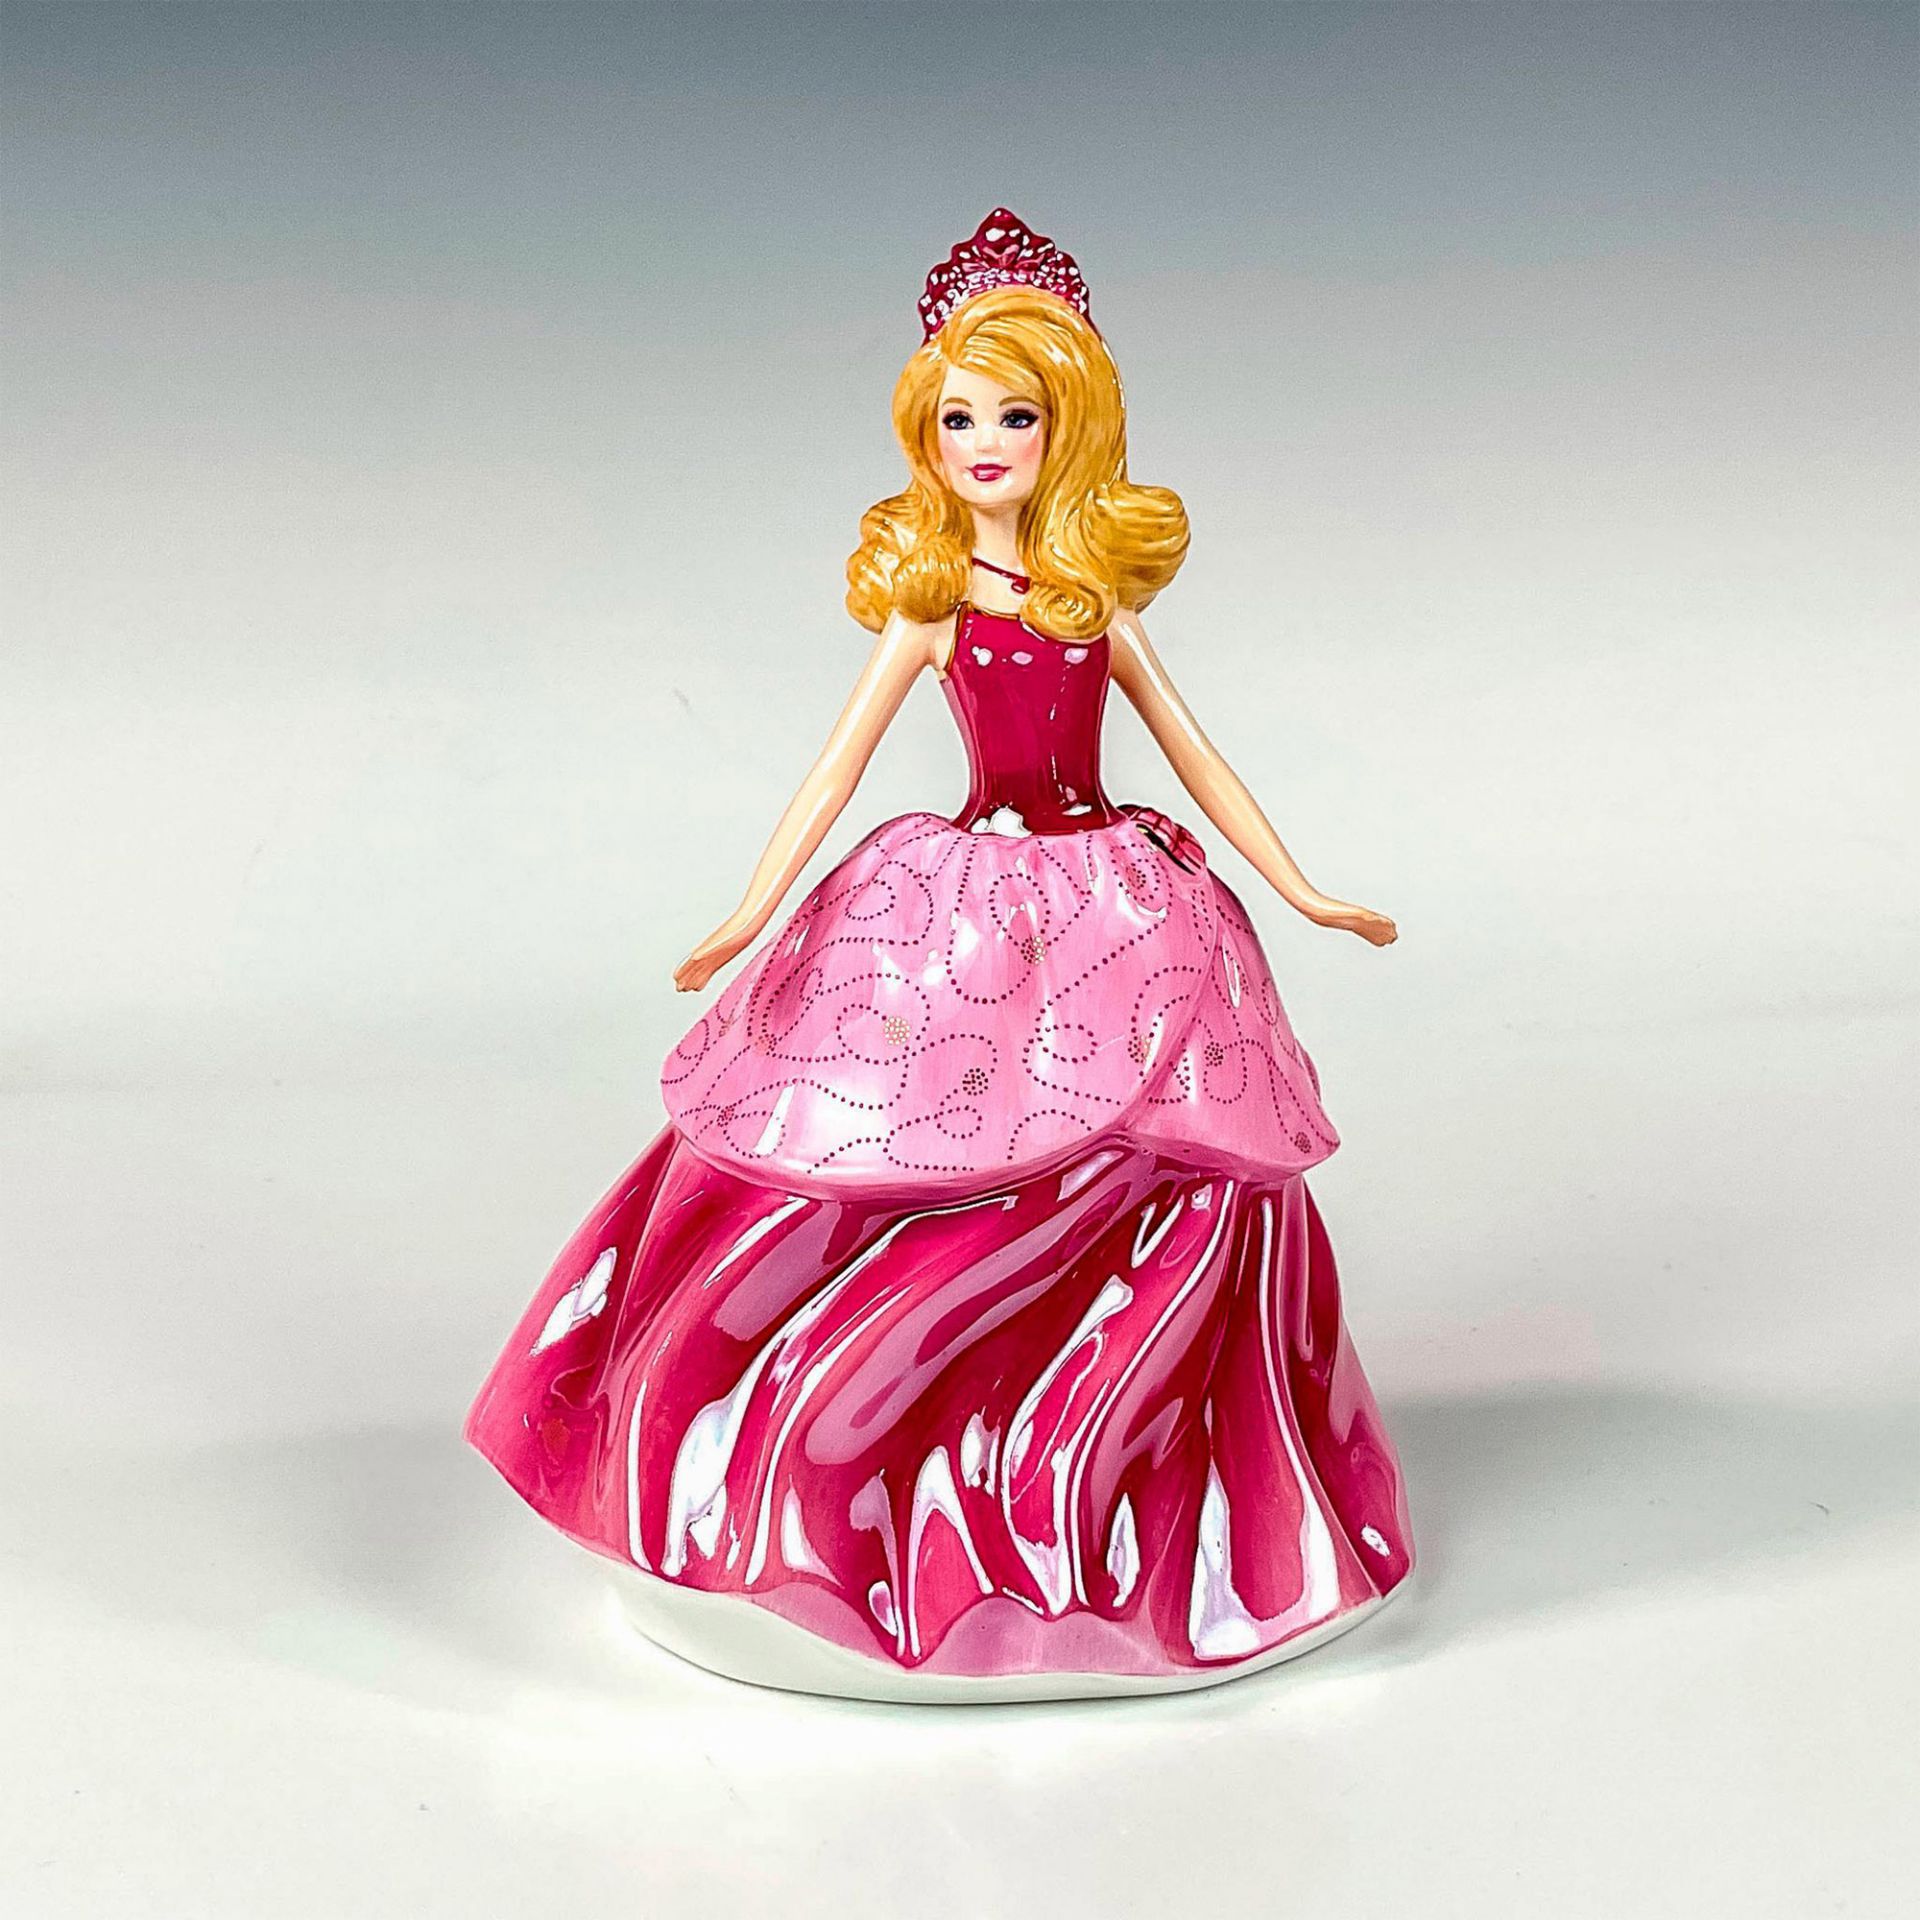 Barbie Princess Charm School HN5610 - Royal Doulton Figurine